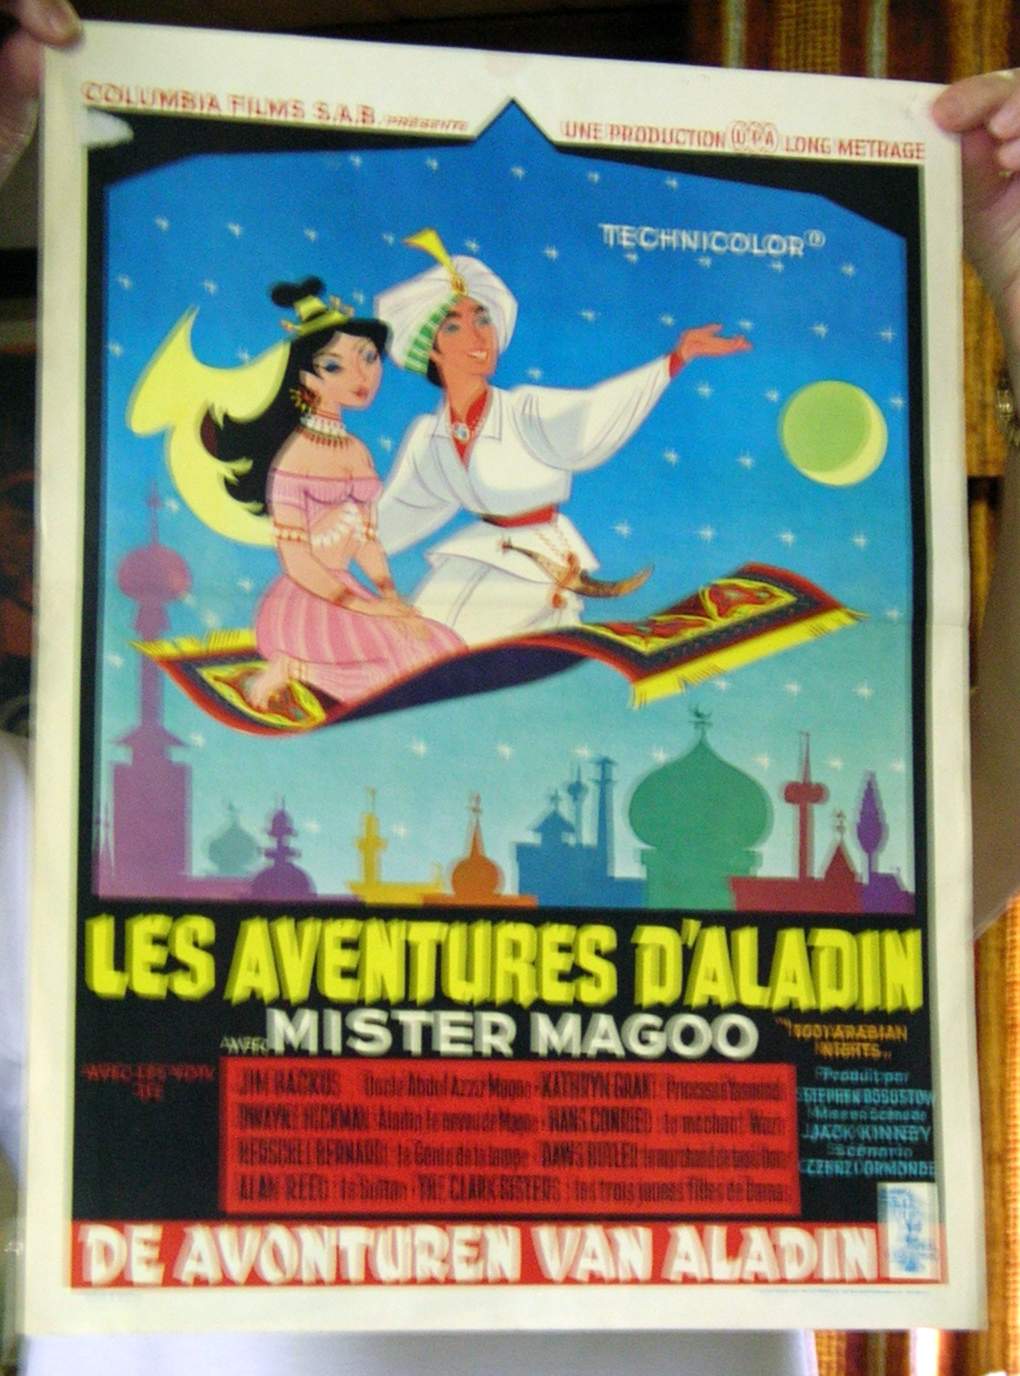 Aladdin (1992) - Filmaffinity